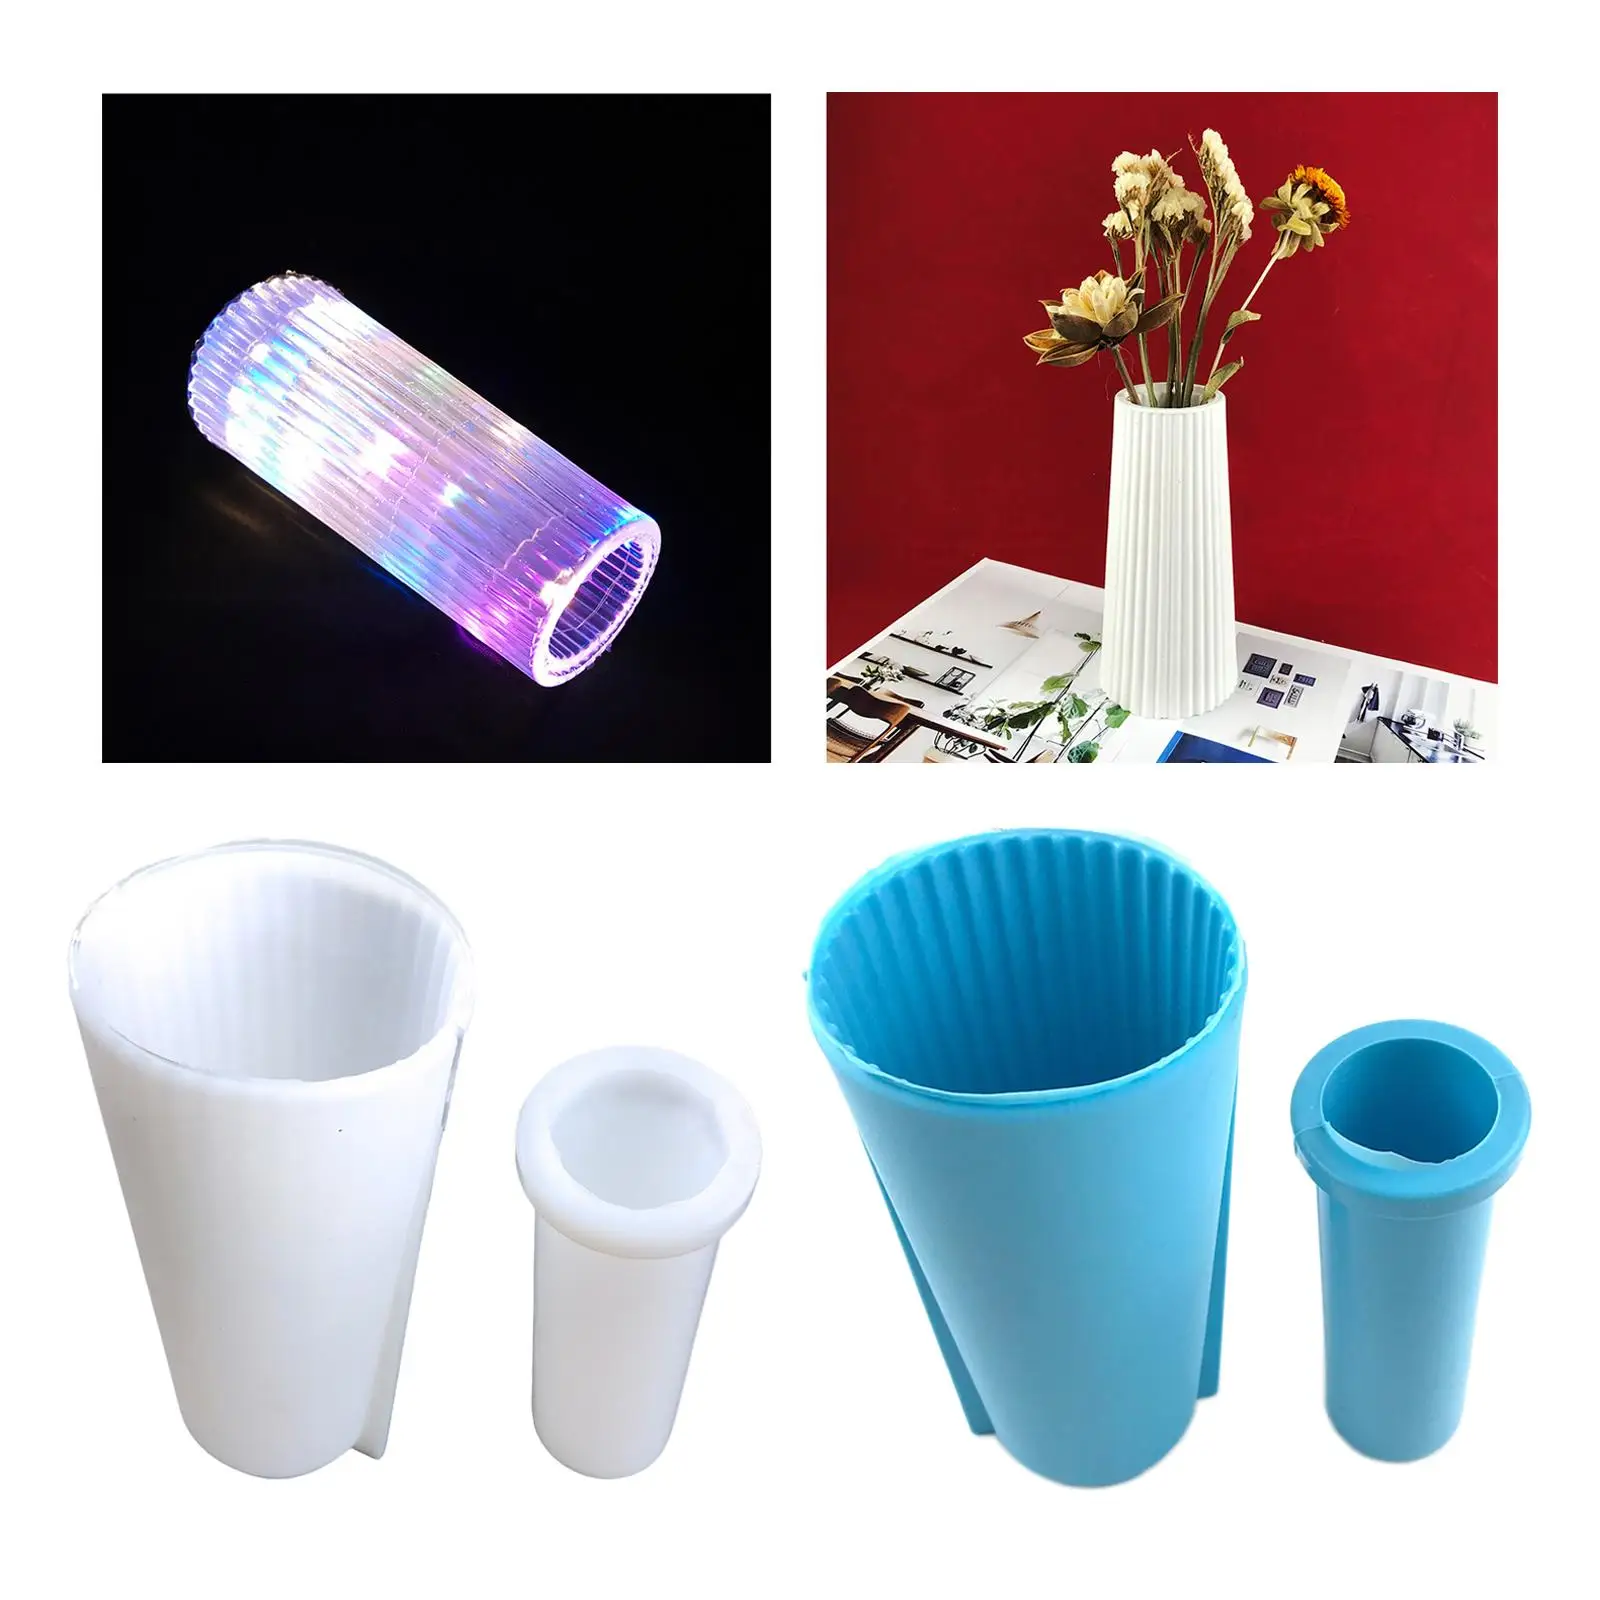 2x Planter Vases Silicone Molds DIY Art Making Epoxy Plaster Concrete Flower Pot Injection Mould for Concrete, Cement, Resin